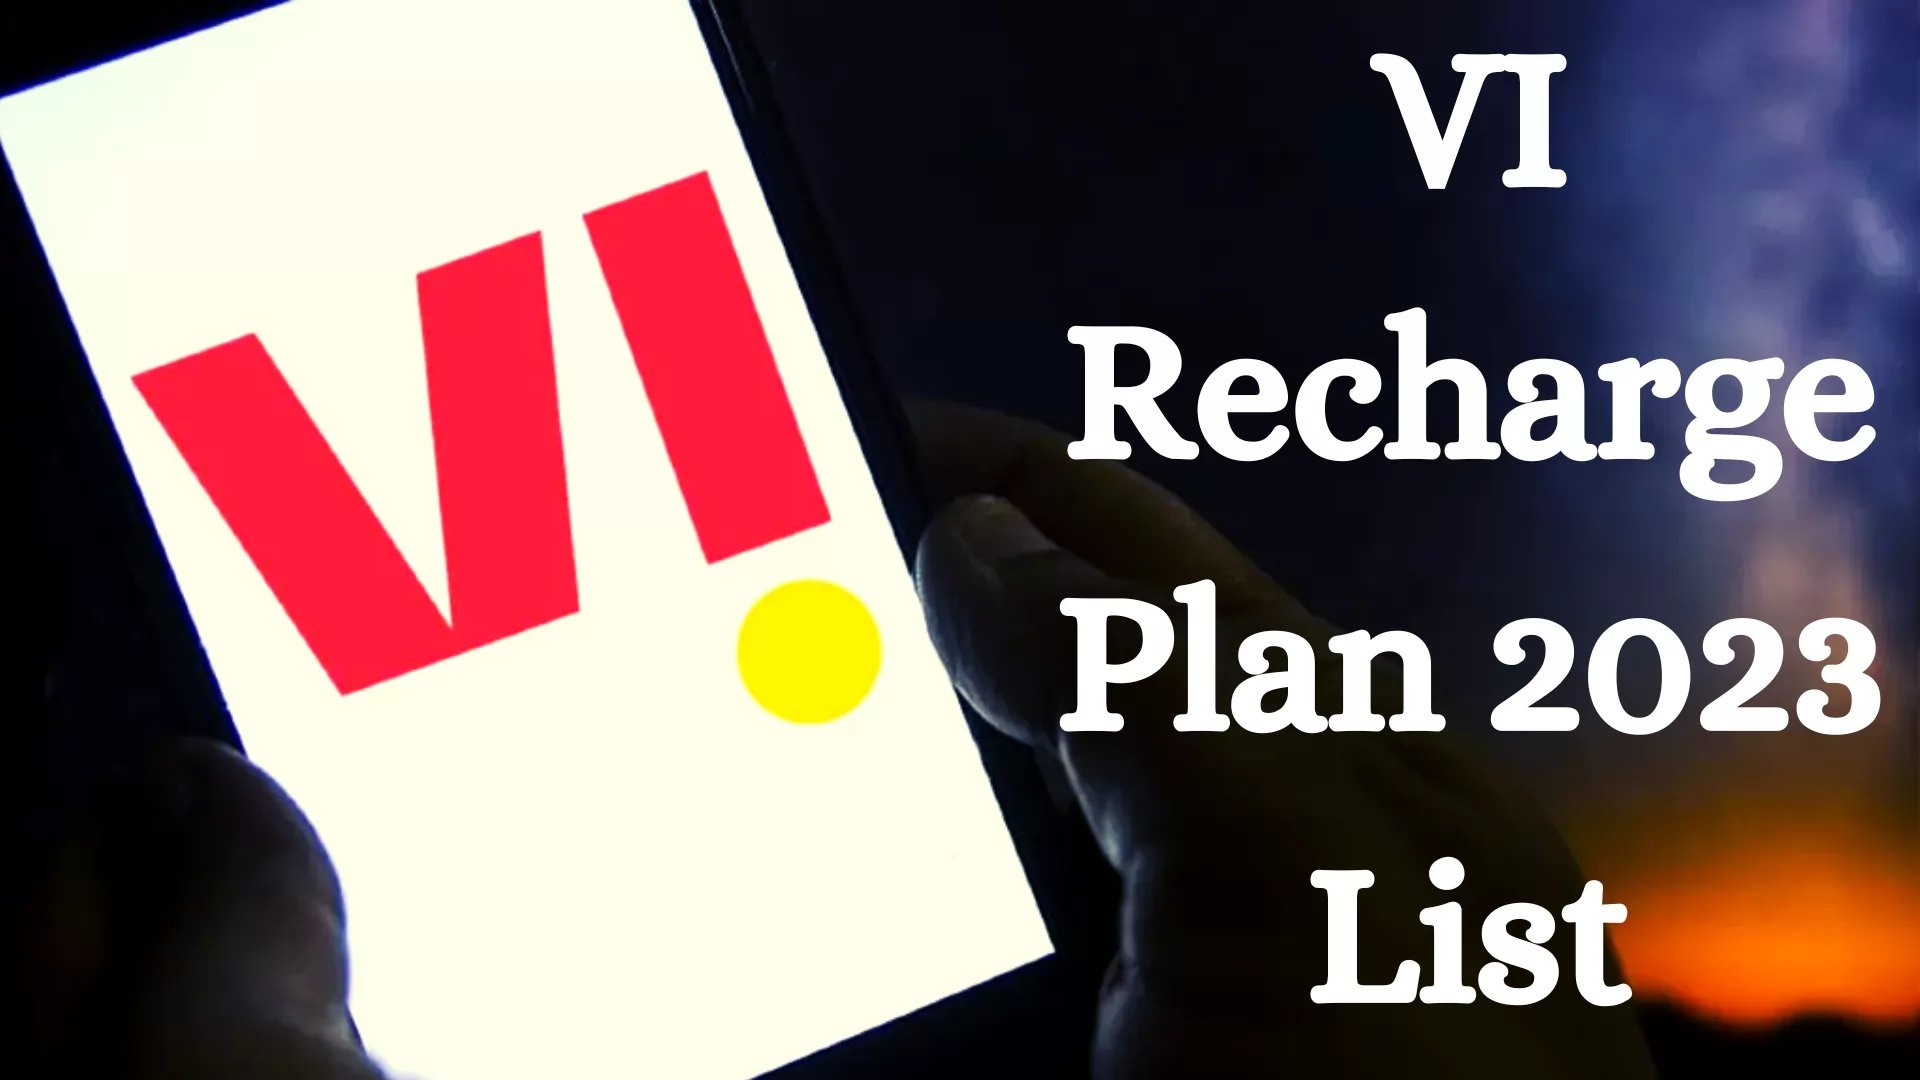 VI Recharge Plan 2023 List